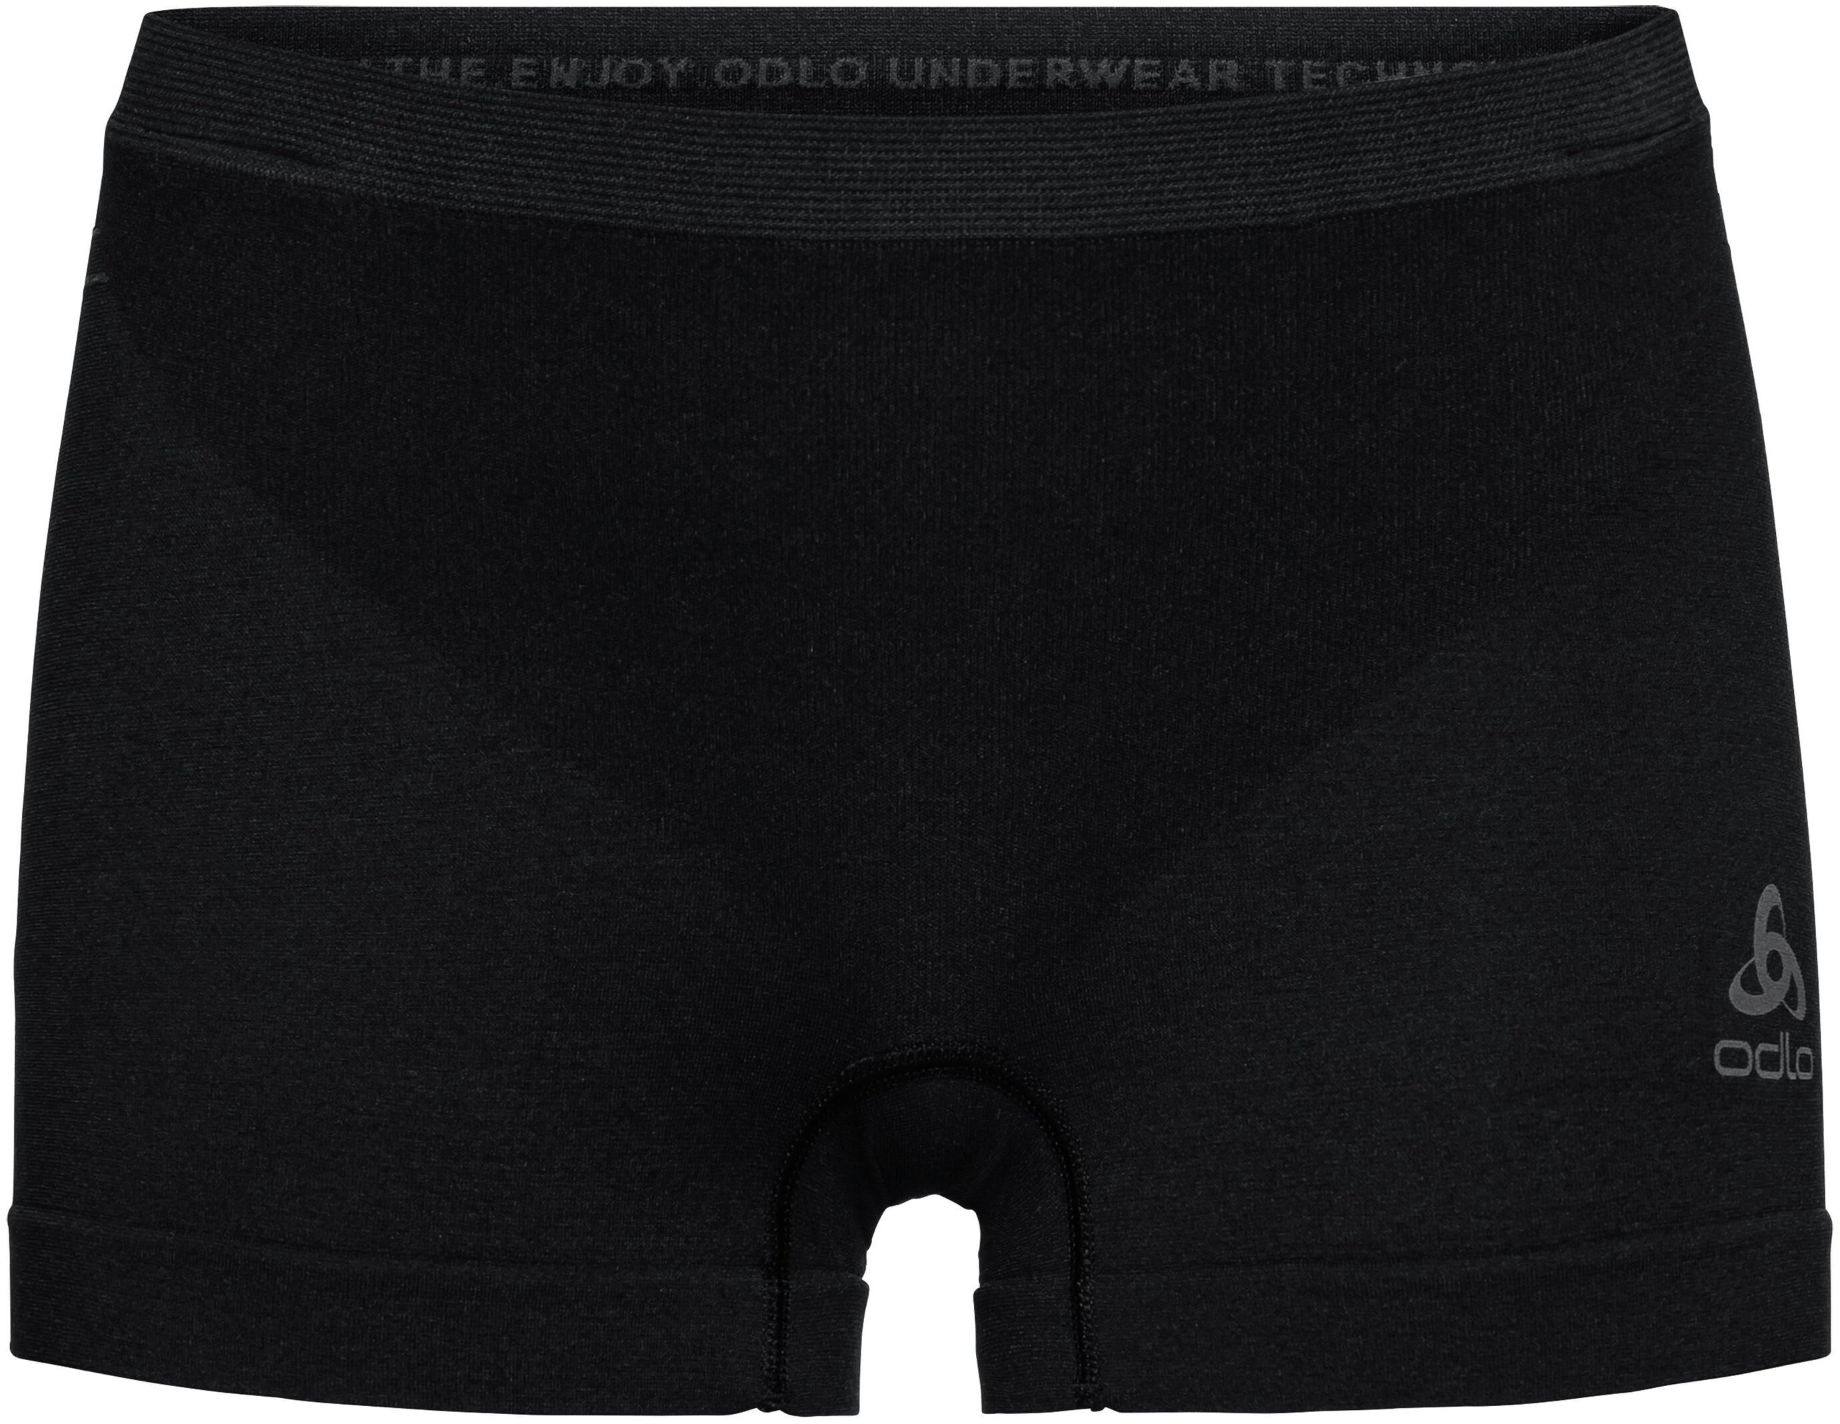 Women’s Performance Light Sports-Underwear Panty Black XS